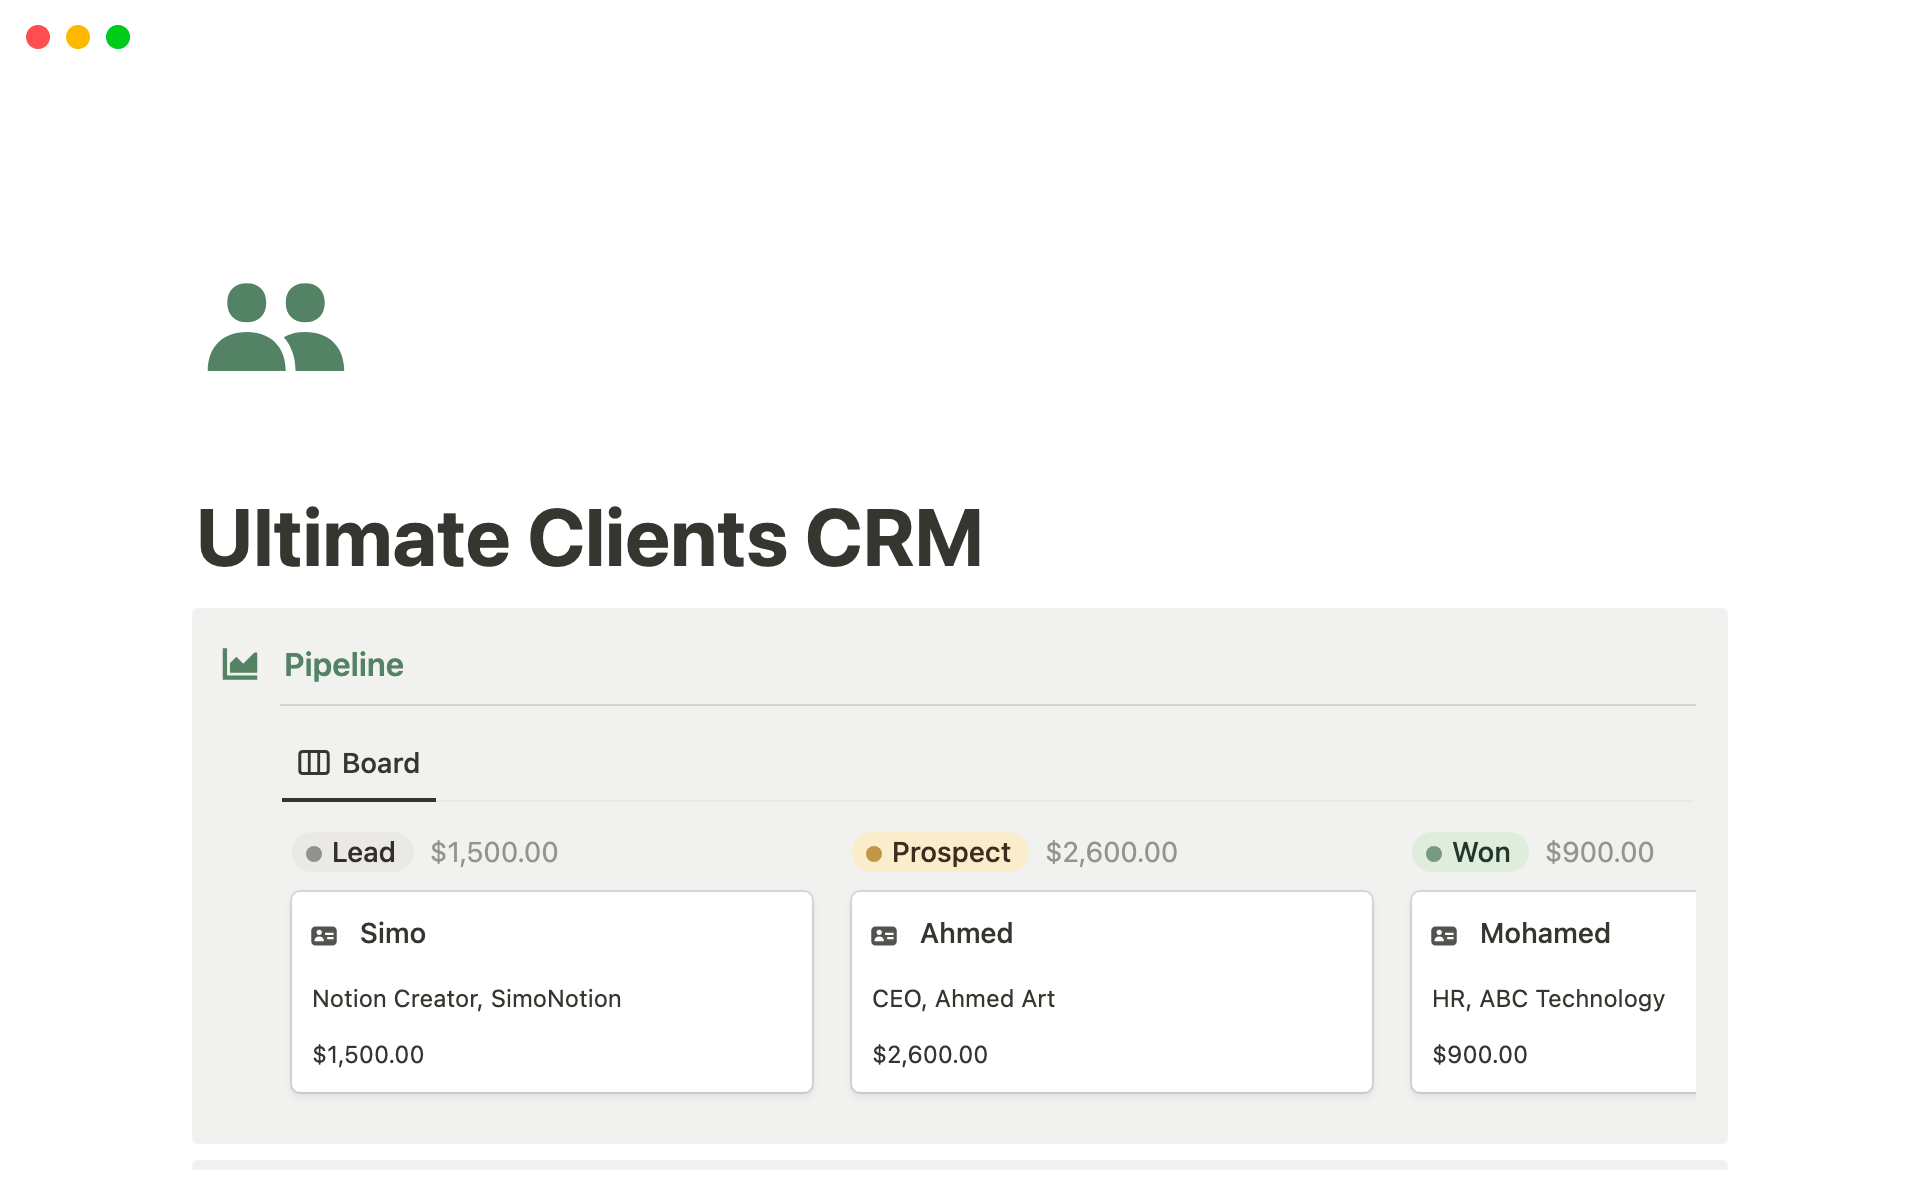 Vista previa de plantilla para Ultimate Clients CRM